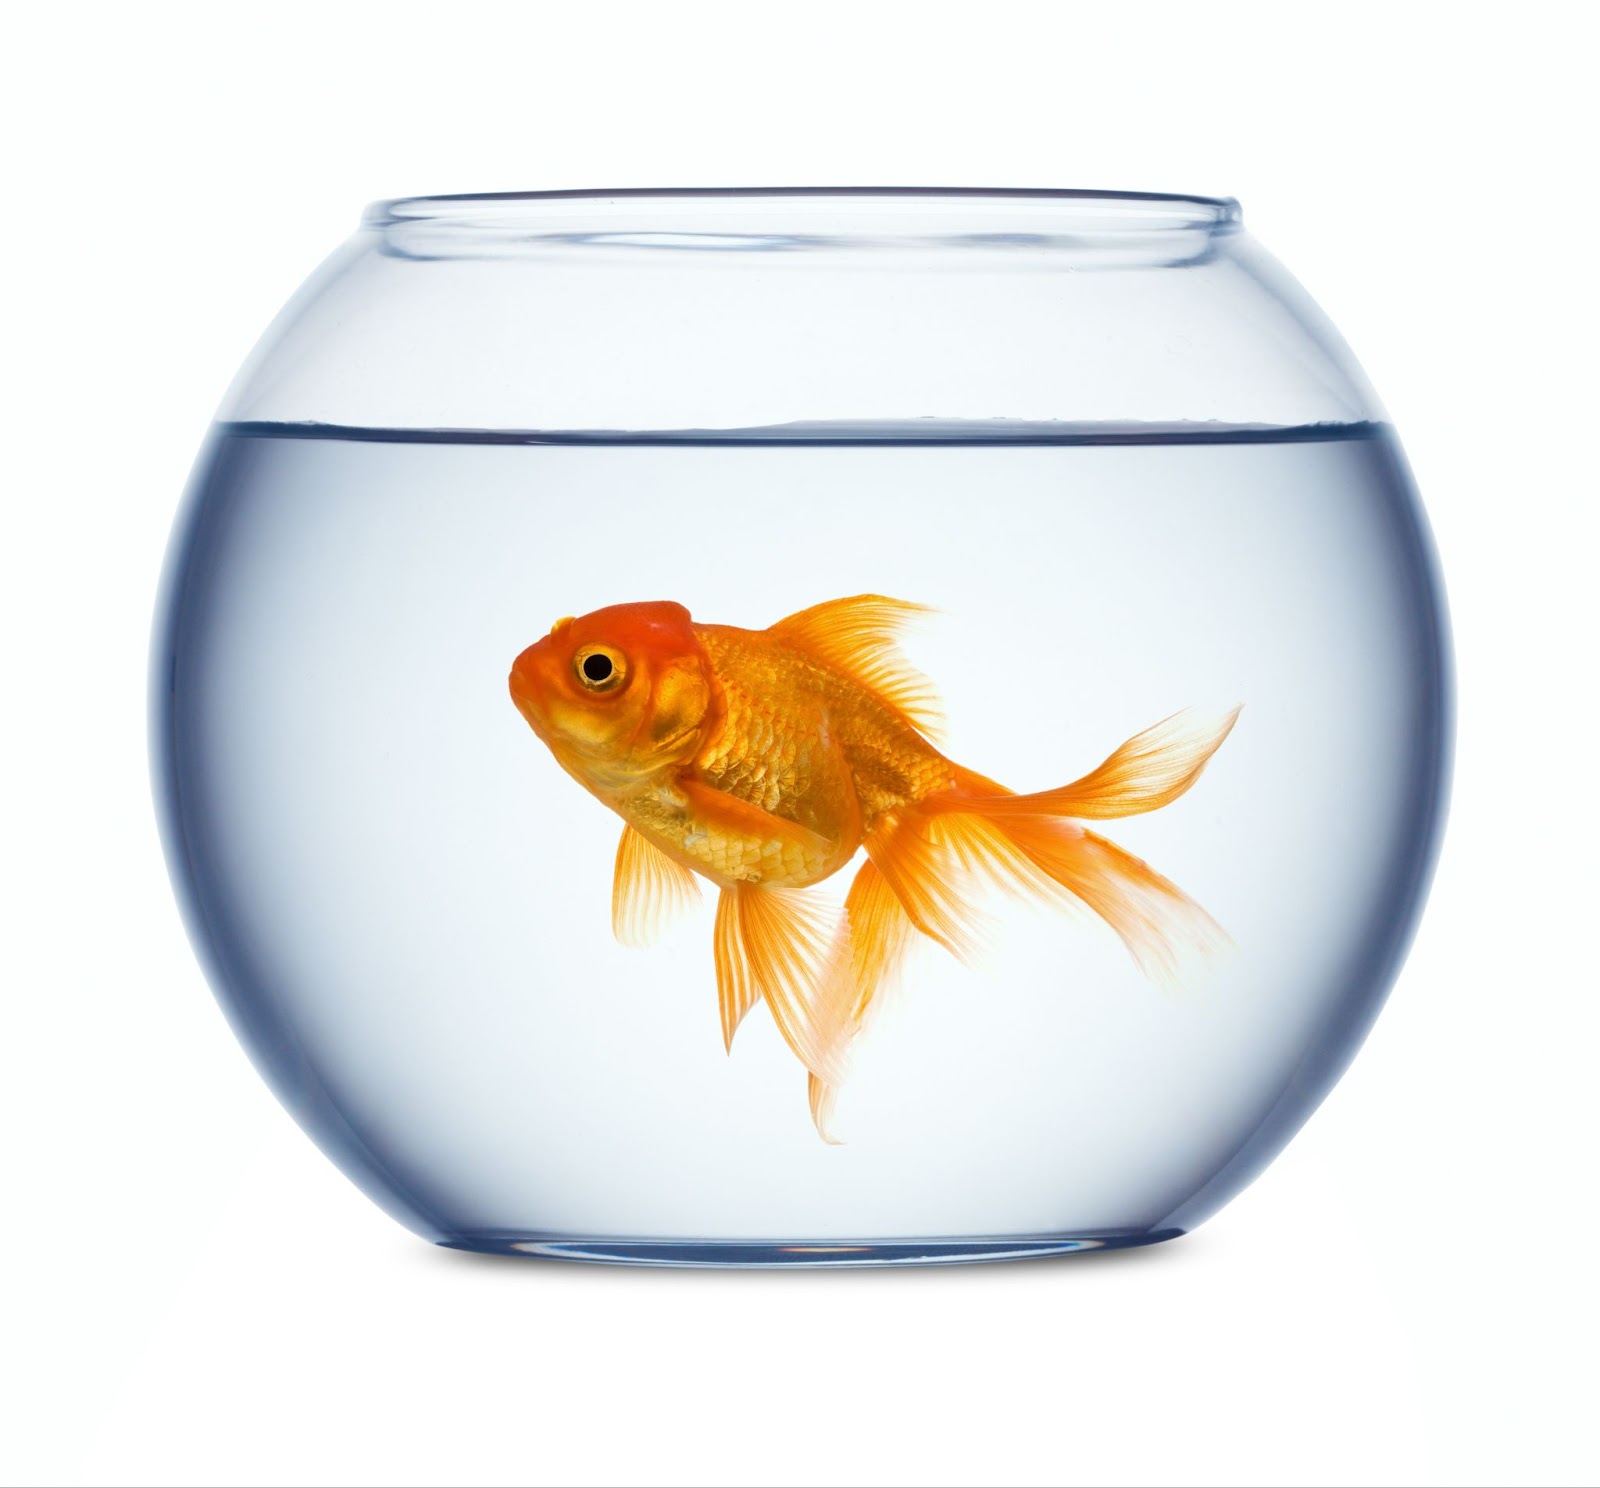 The Impatient Patient: New Patient Generation In The Goldfish Attention Span Era.